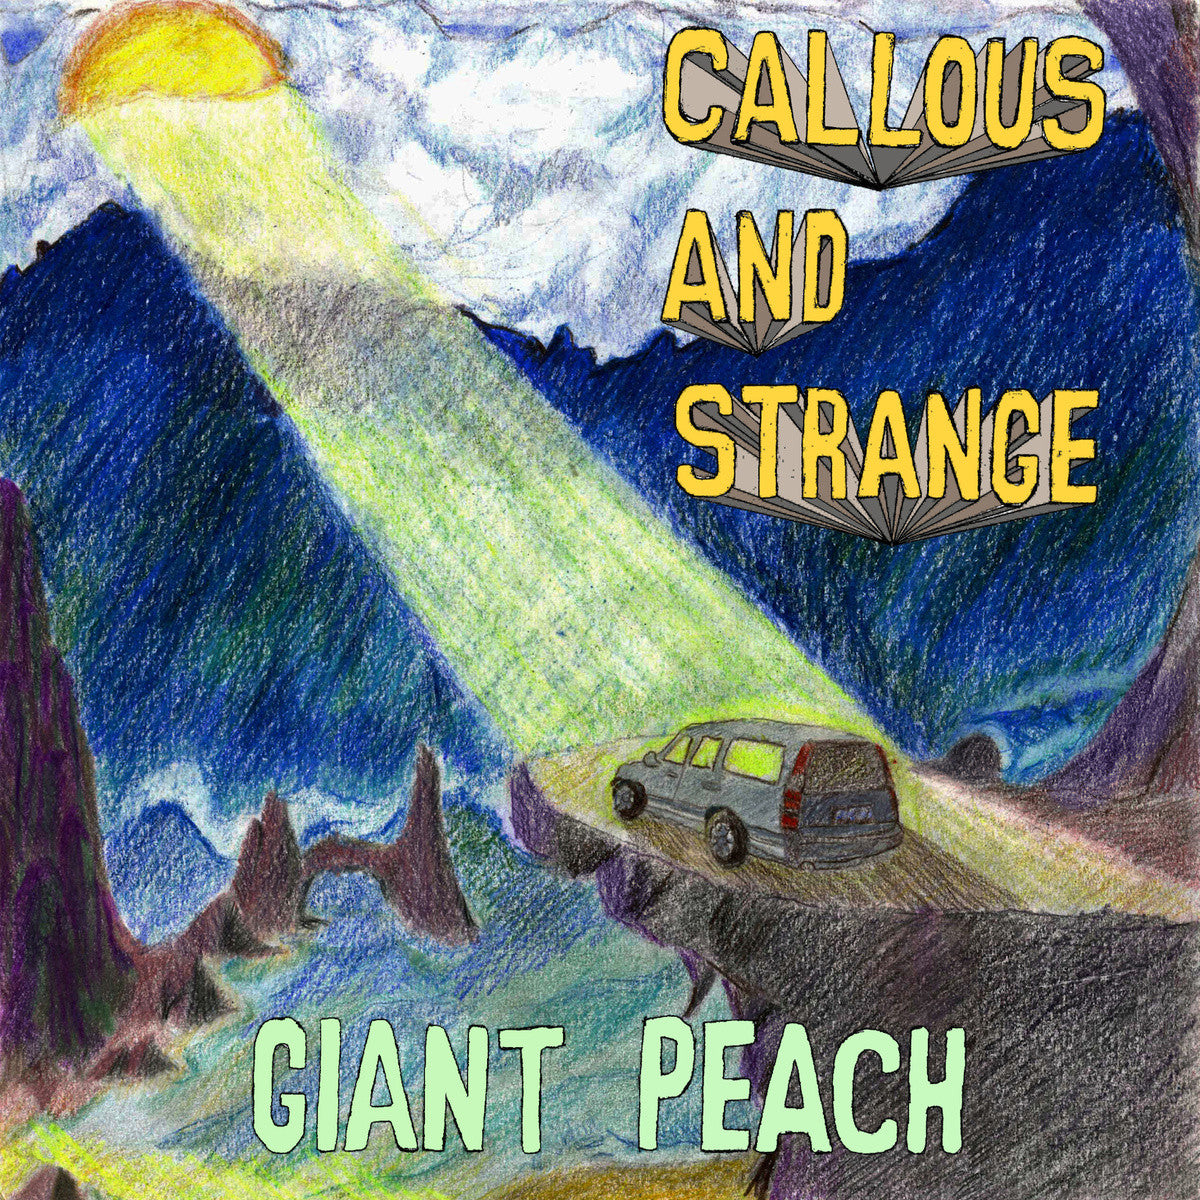 GIANT PEACH "Callous and Strange" seven inch record